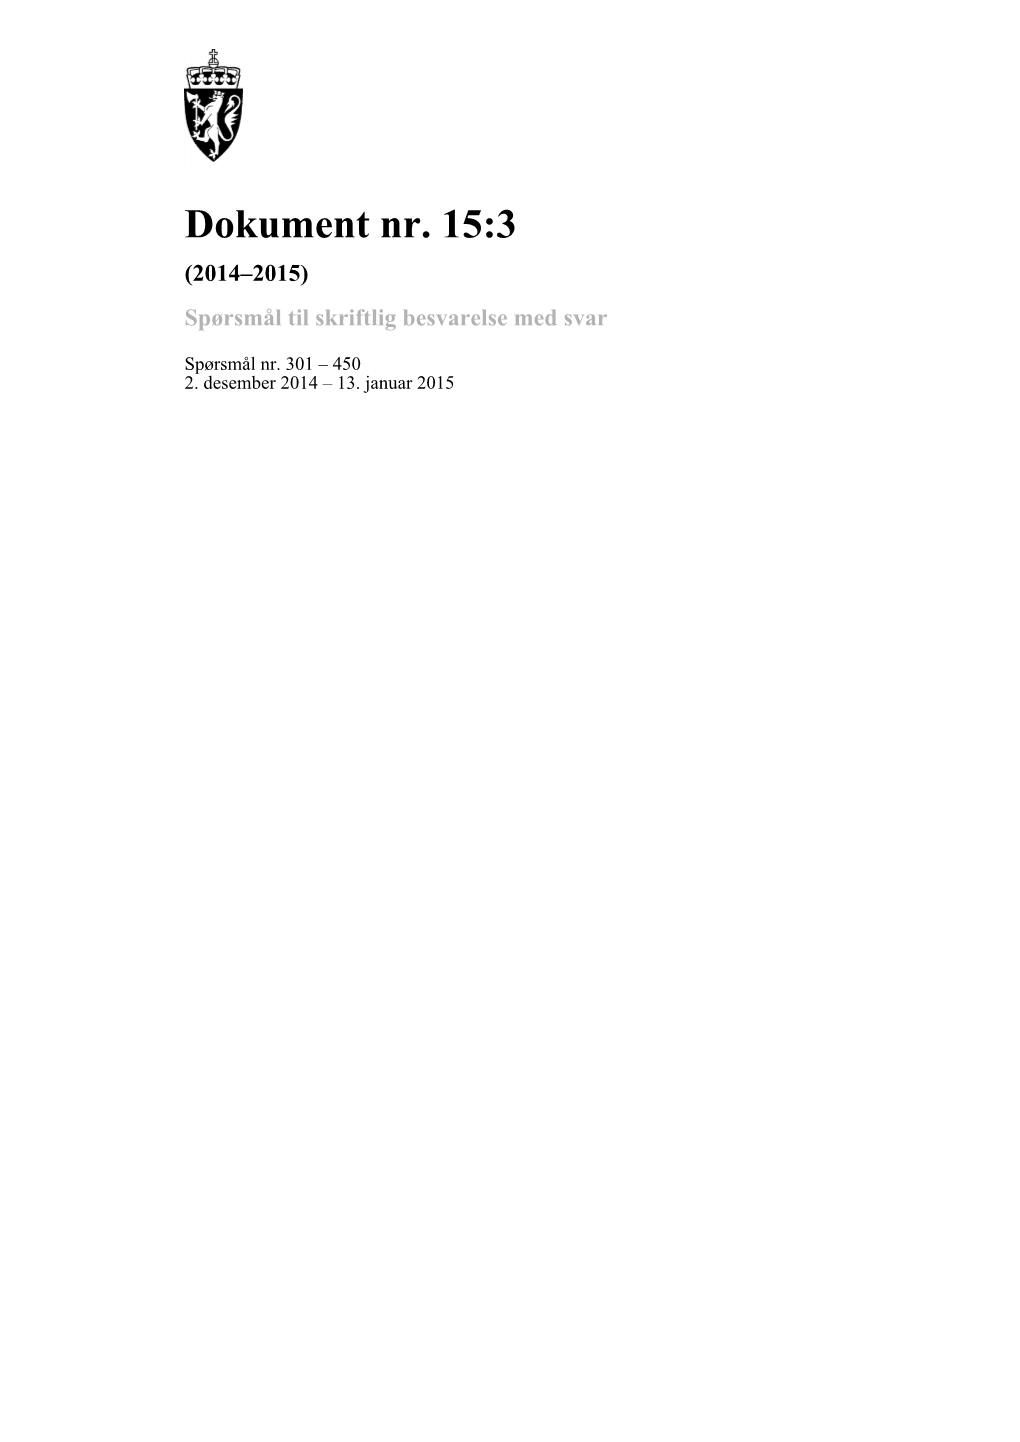 Dokument Nr. 15:3 (2014-2015). Spørsmål Nr. 301-450